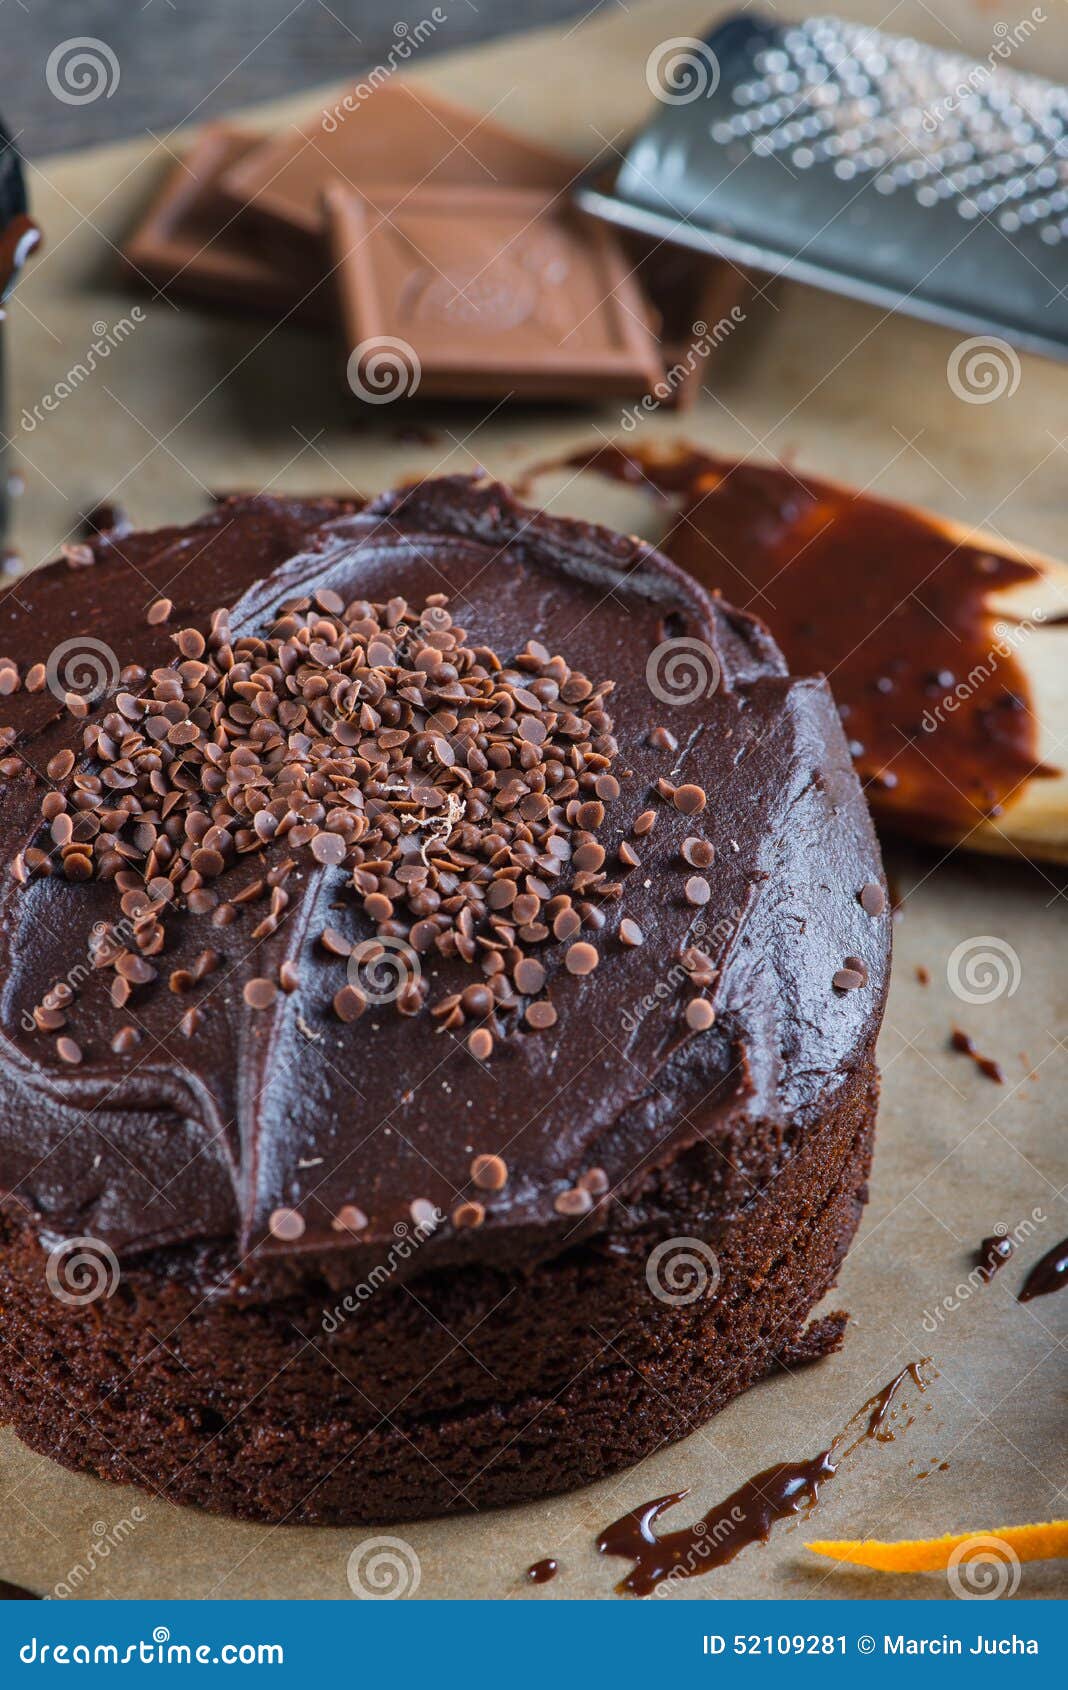 Homemade Chocolate Torte